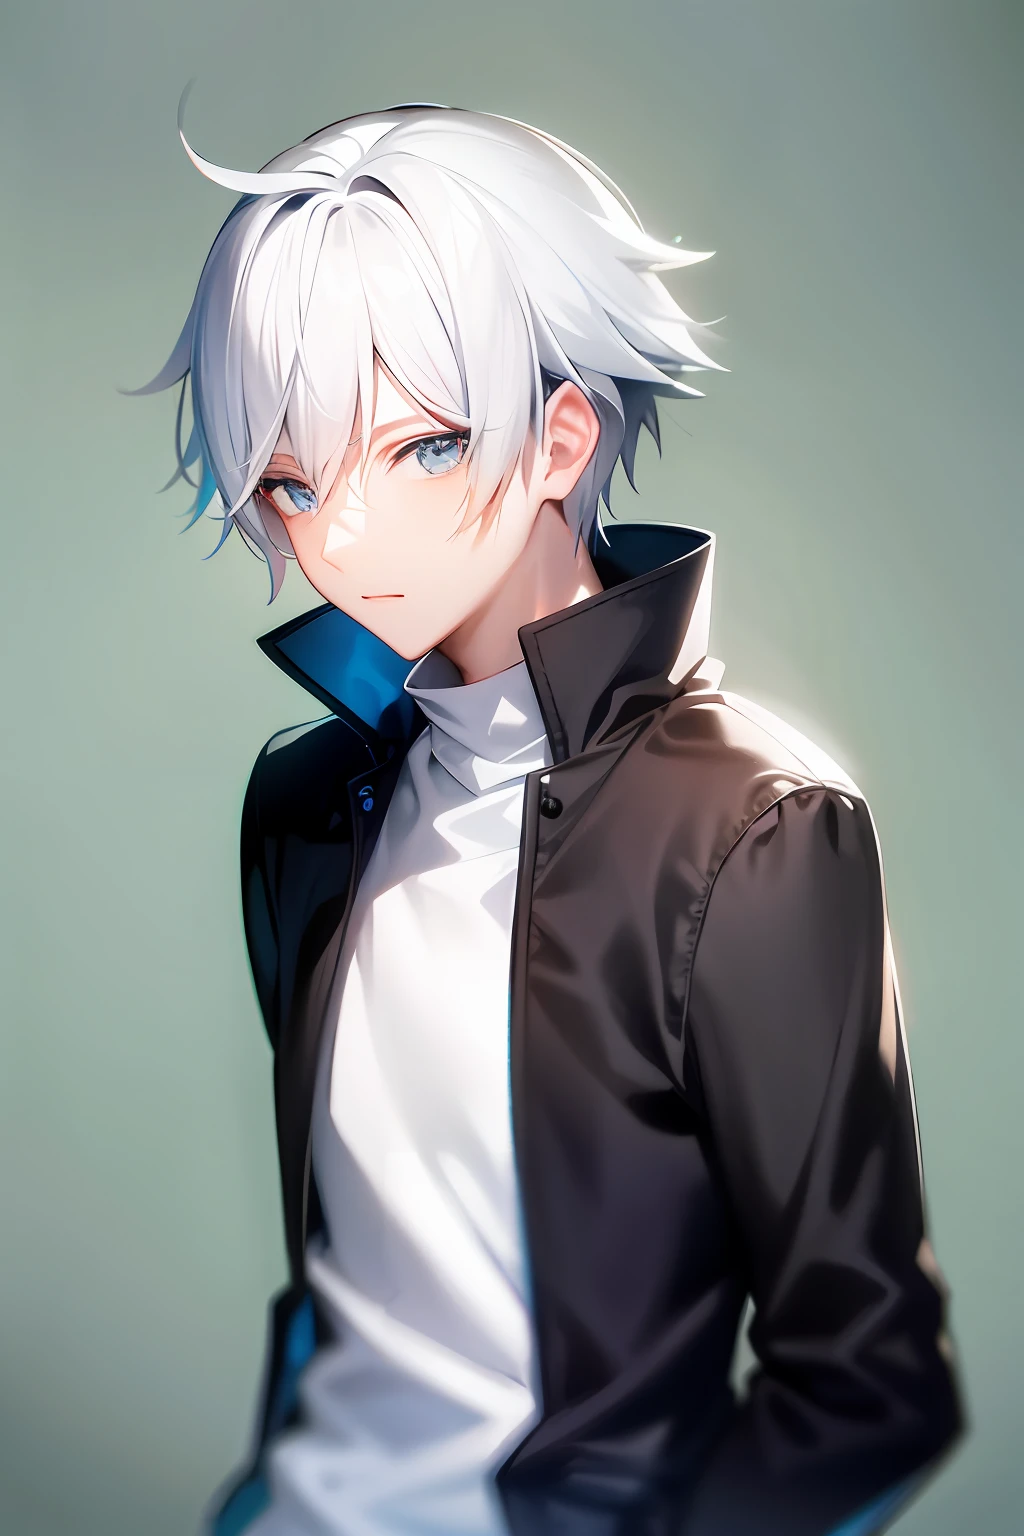 Lindo protagonista masculino de anime con cabello blanco